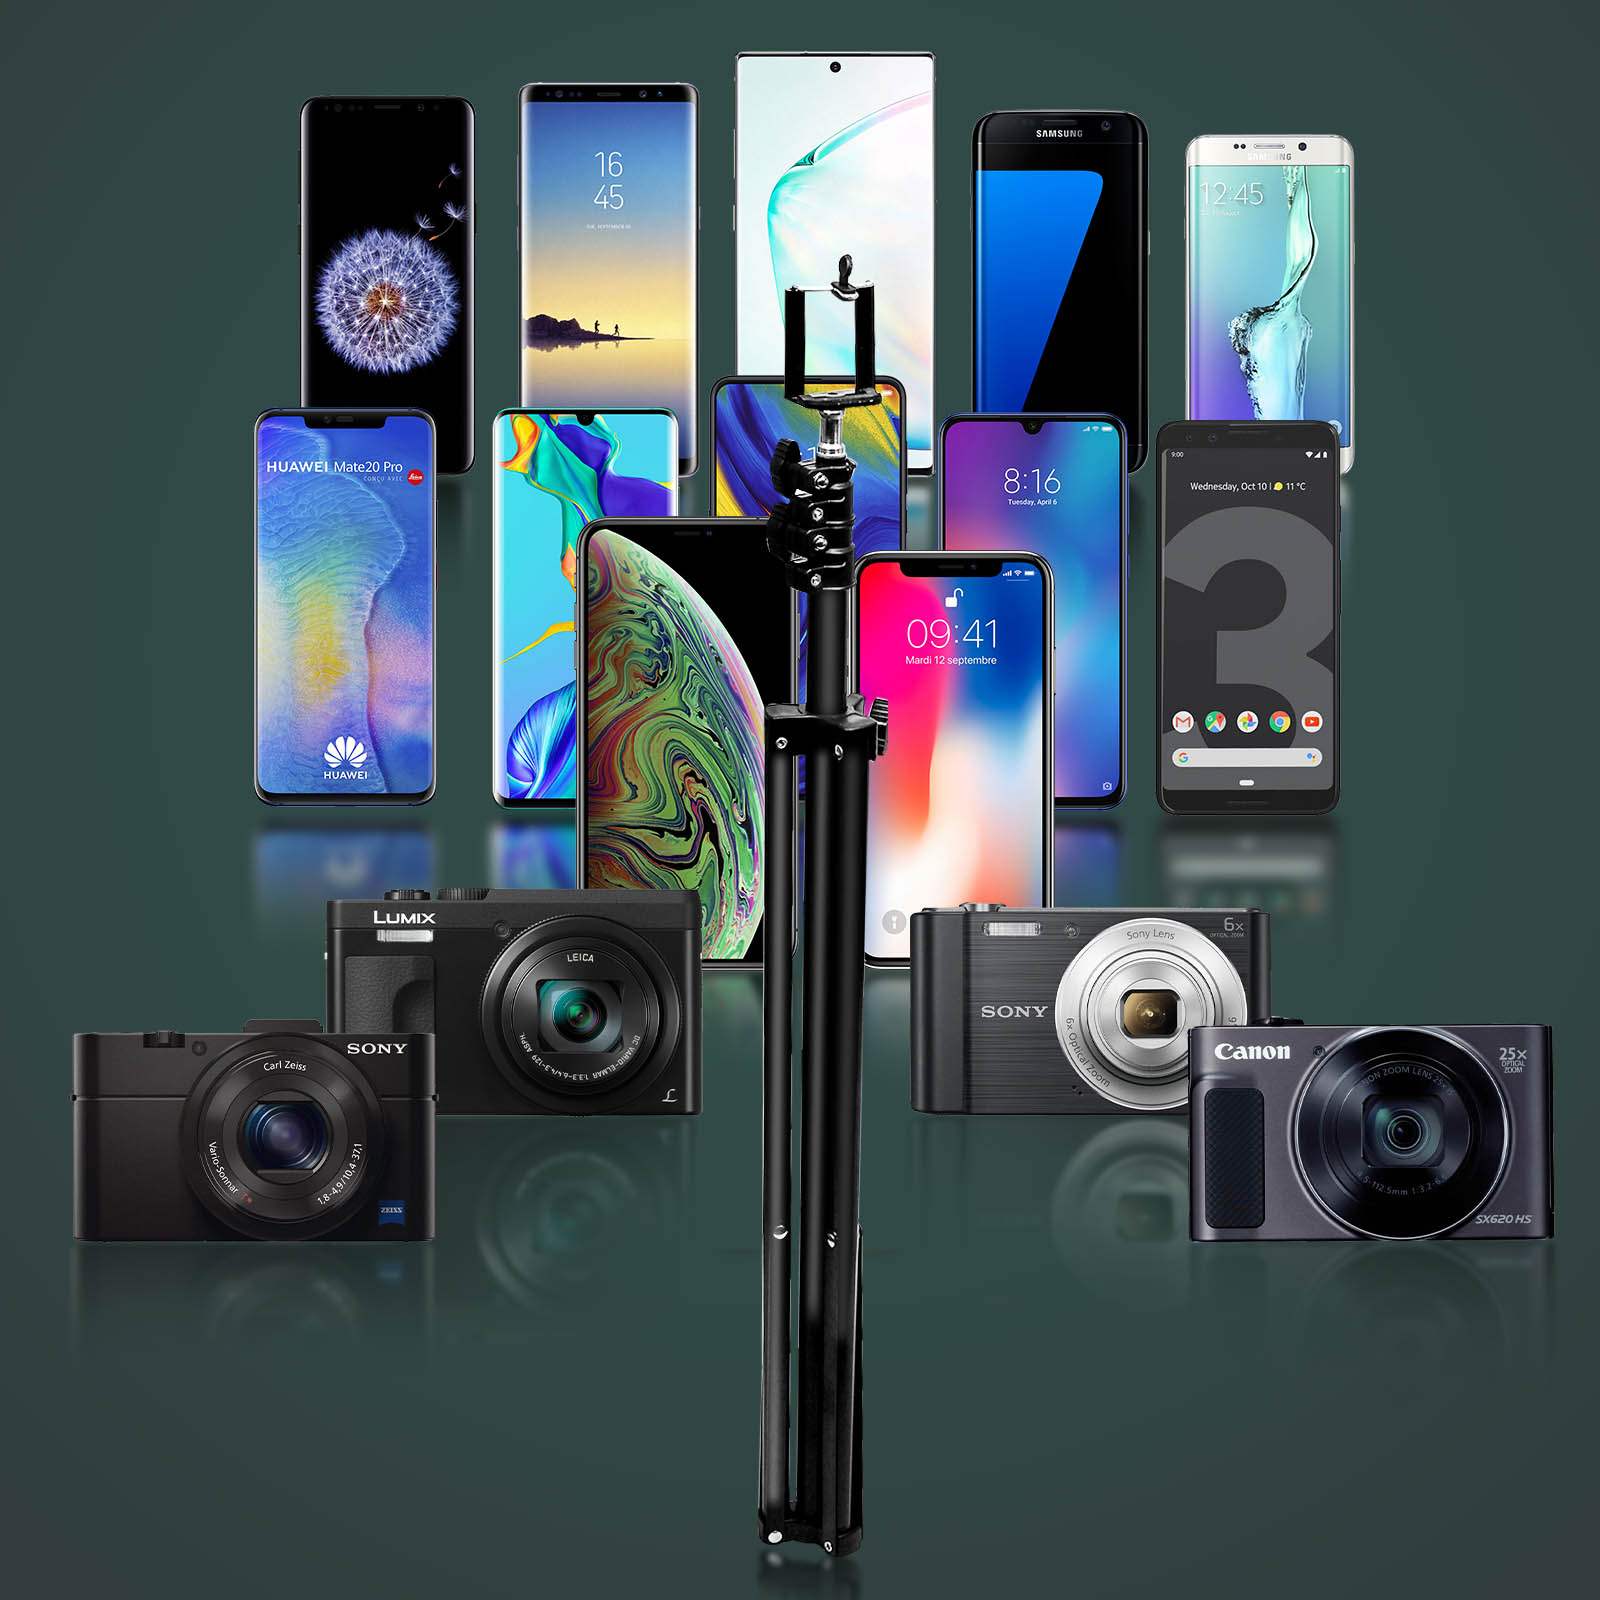 Trépied smartphone, caméra, appareil photo ajustable de 48 cm à 145 cm linq  noir TREP-LINQ-J3257 - Conforama